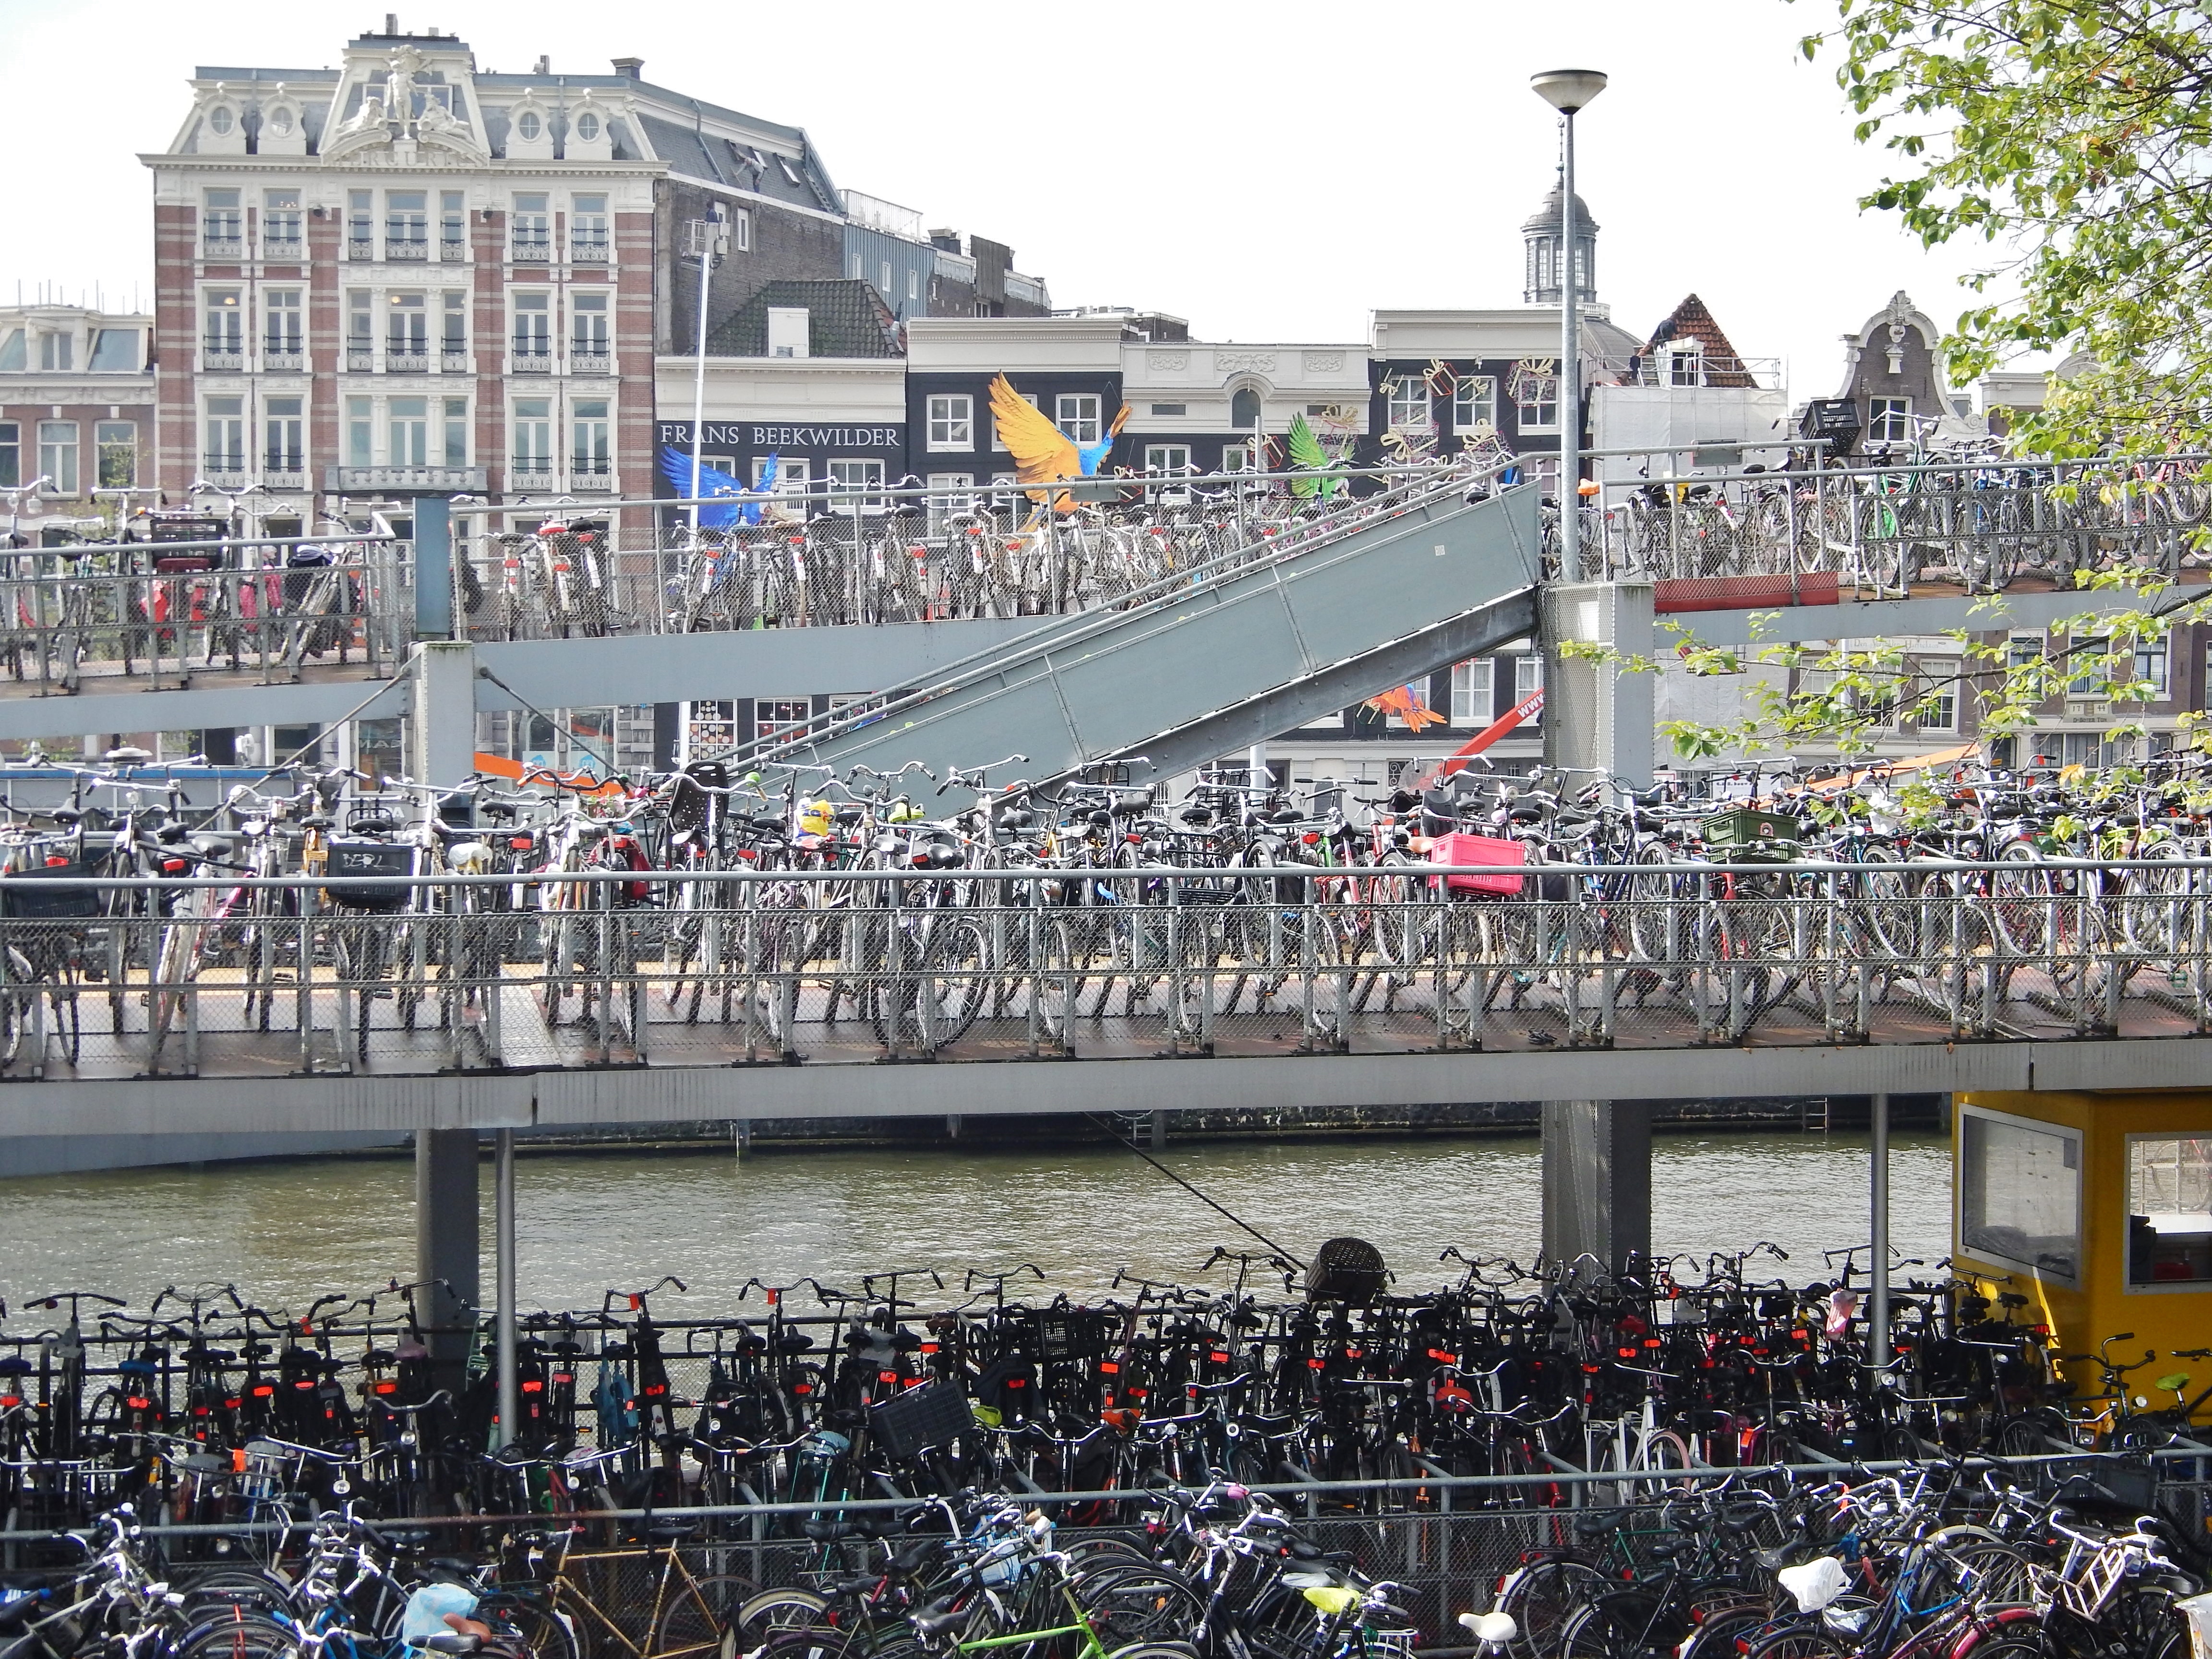 File:Fietsen station amsterdam, fiets parkeren in Amsterdam Railway Station  - panoramio.jpg - Wikimedia Commons